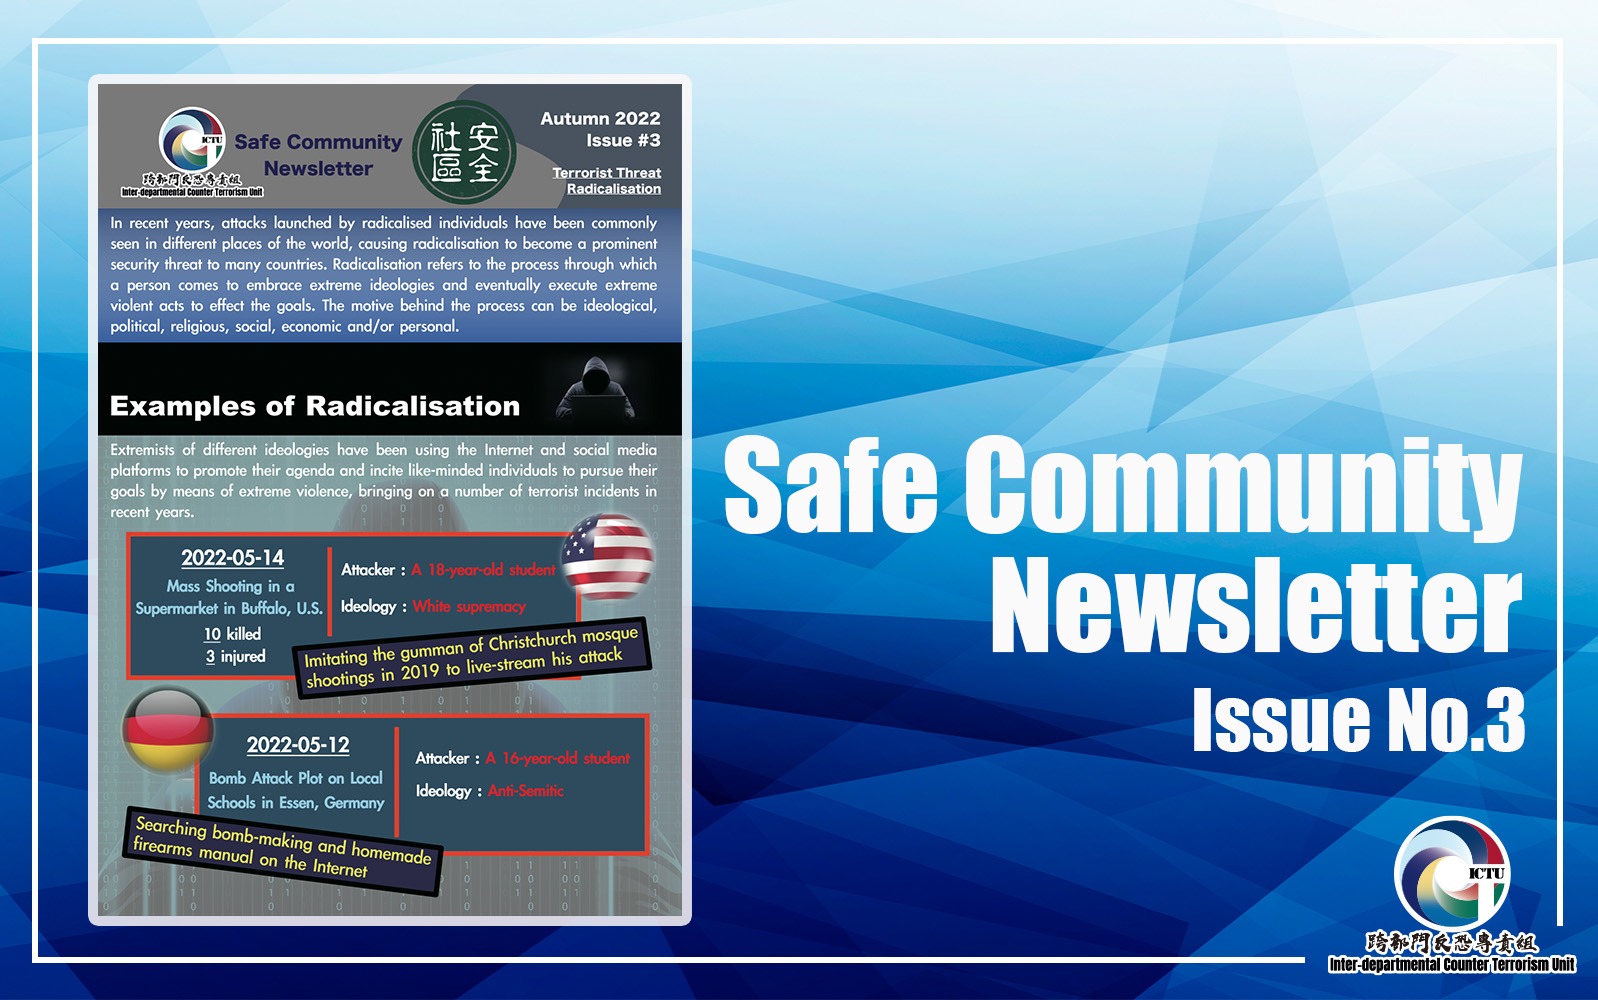 “Safe Community Newsletter” Issue No.3